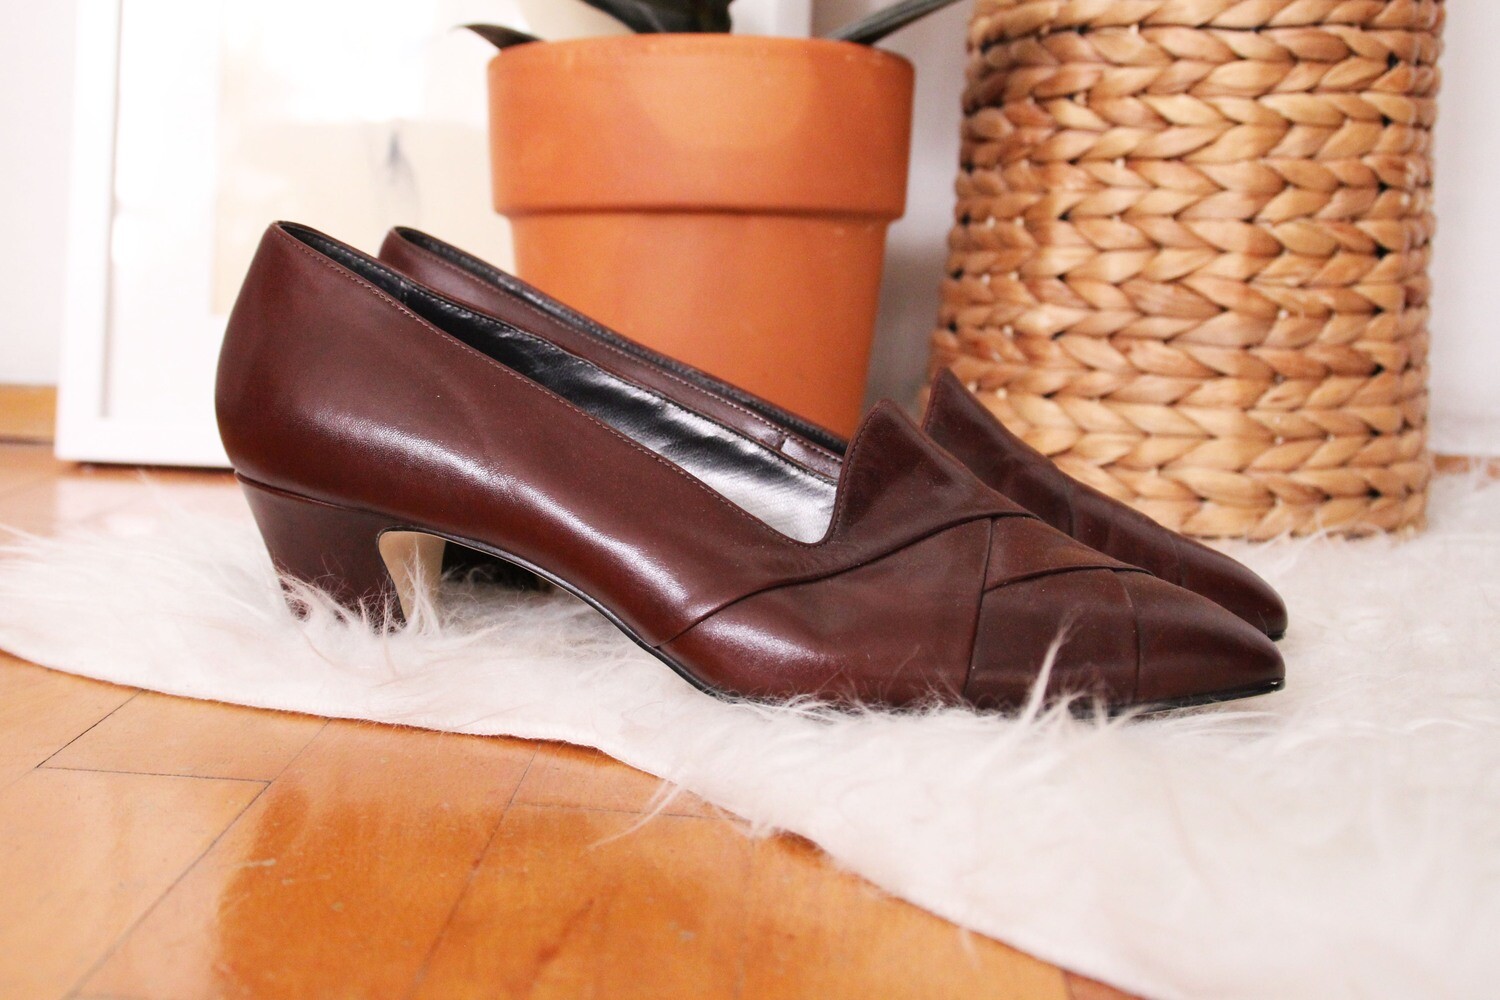 Vintage leather Clarks shoes